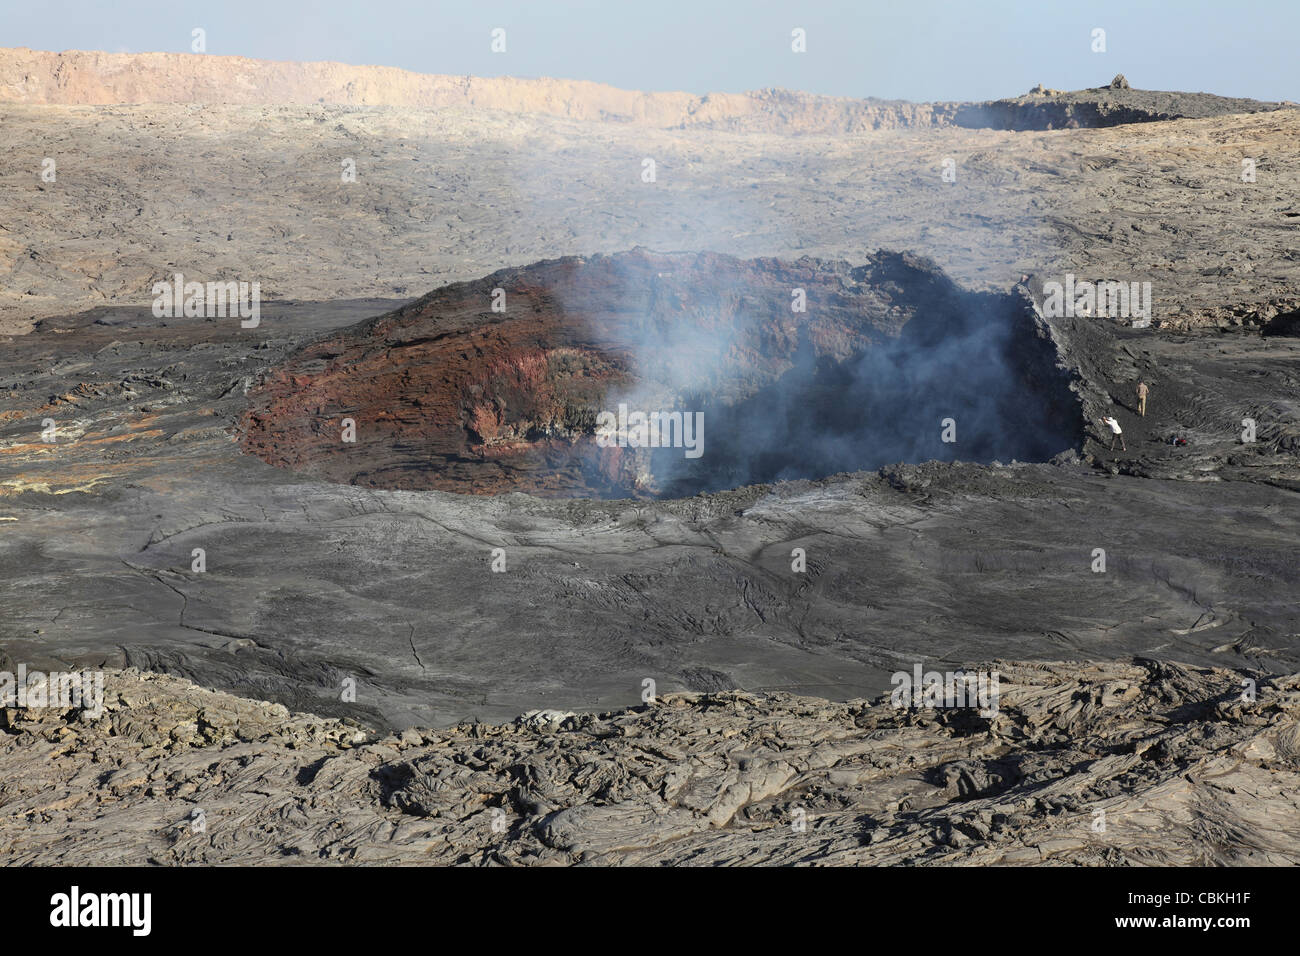 January 30, 2011 - Pit crater harbouring lava lake, Erta Ale volcano, Danakil Depression, Ethiopia. Stock Photo